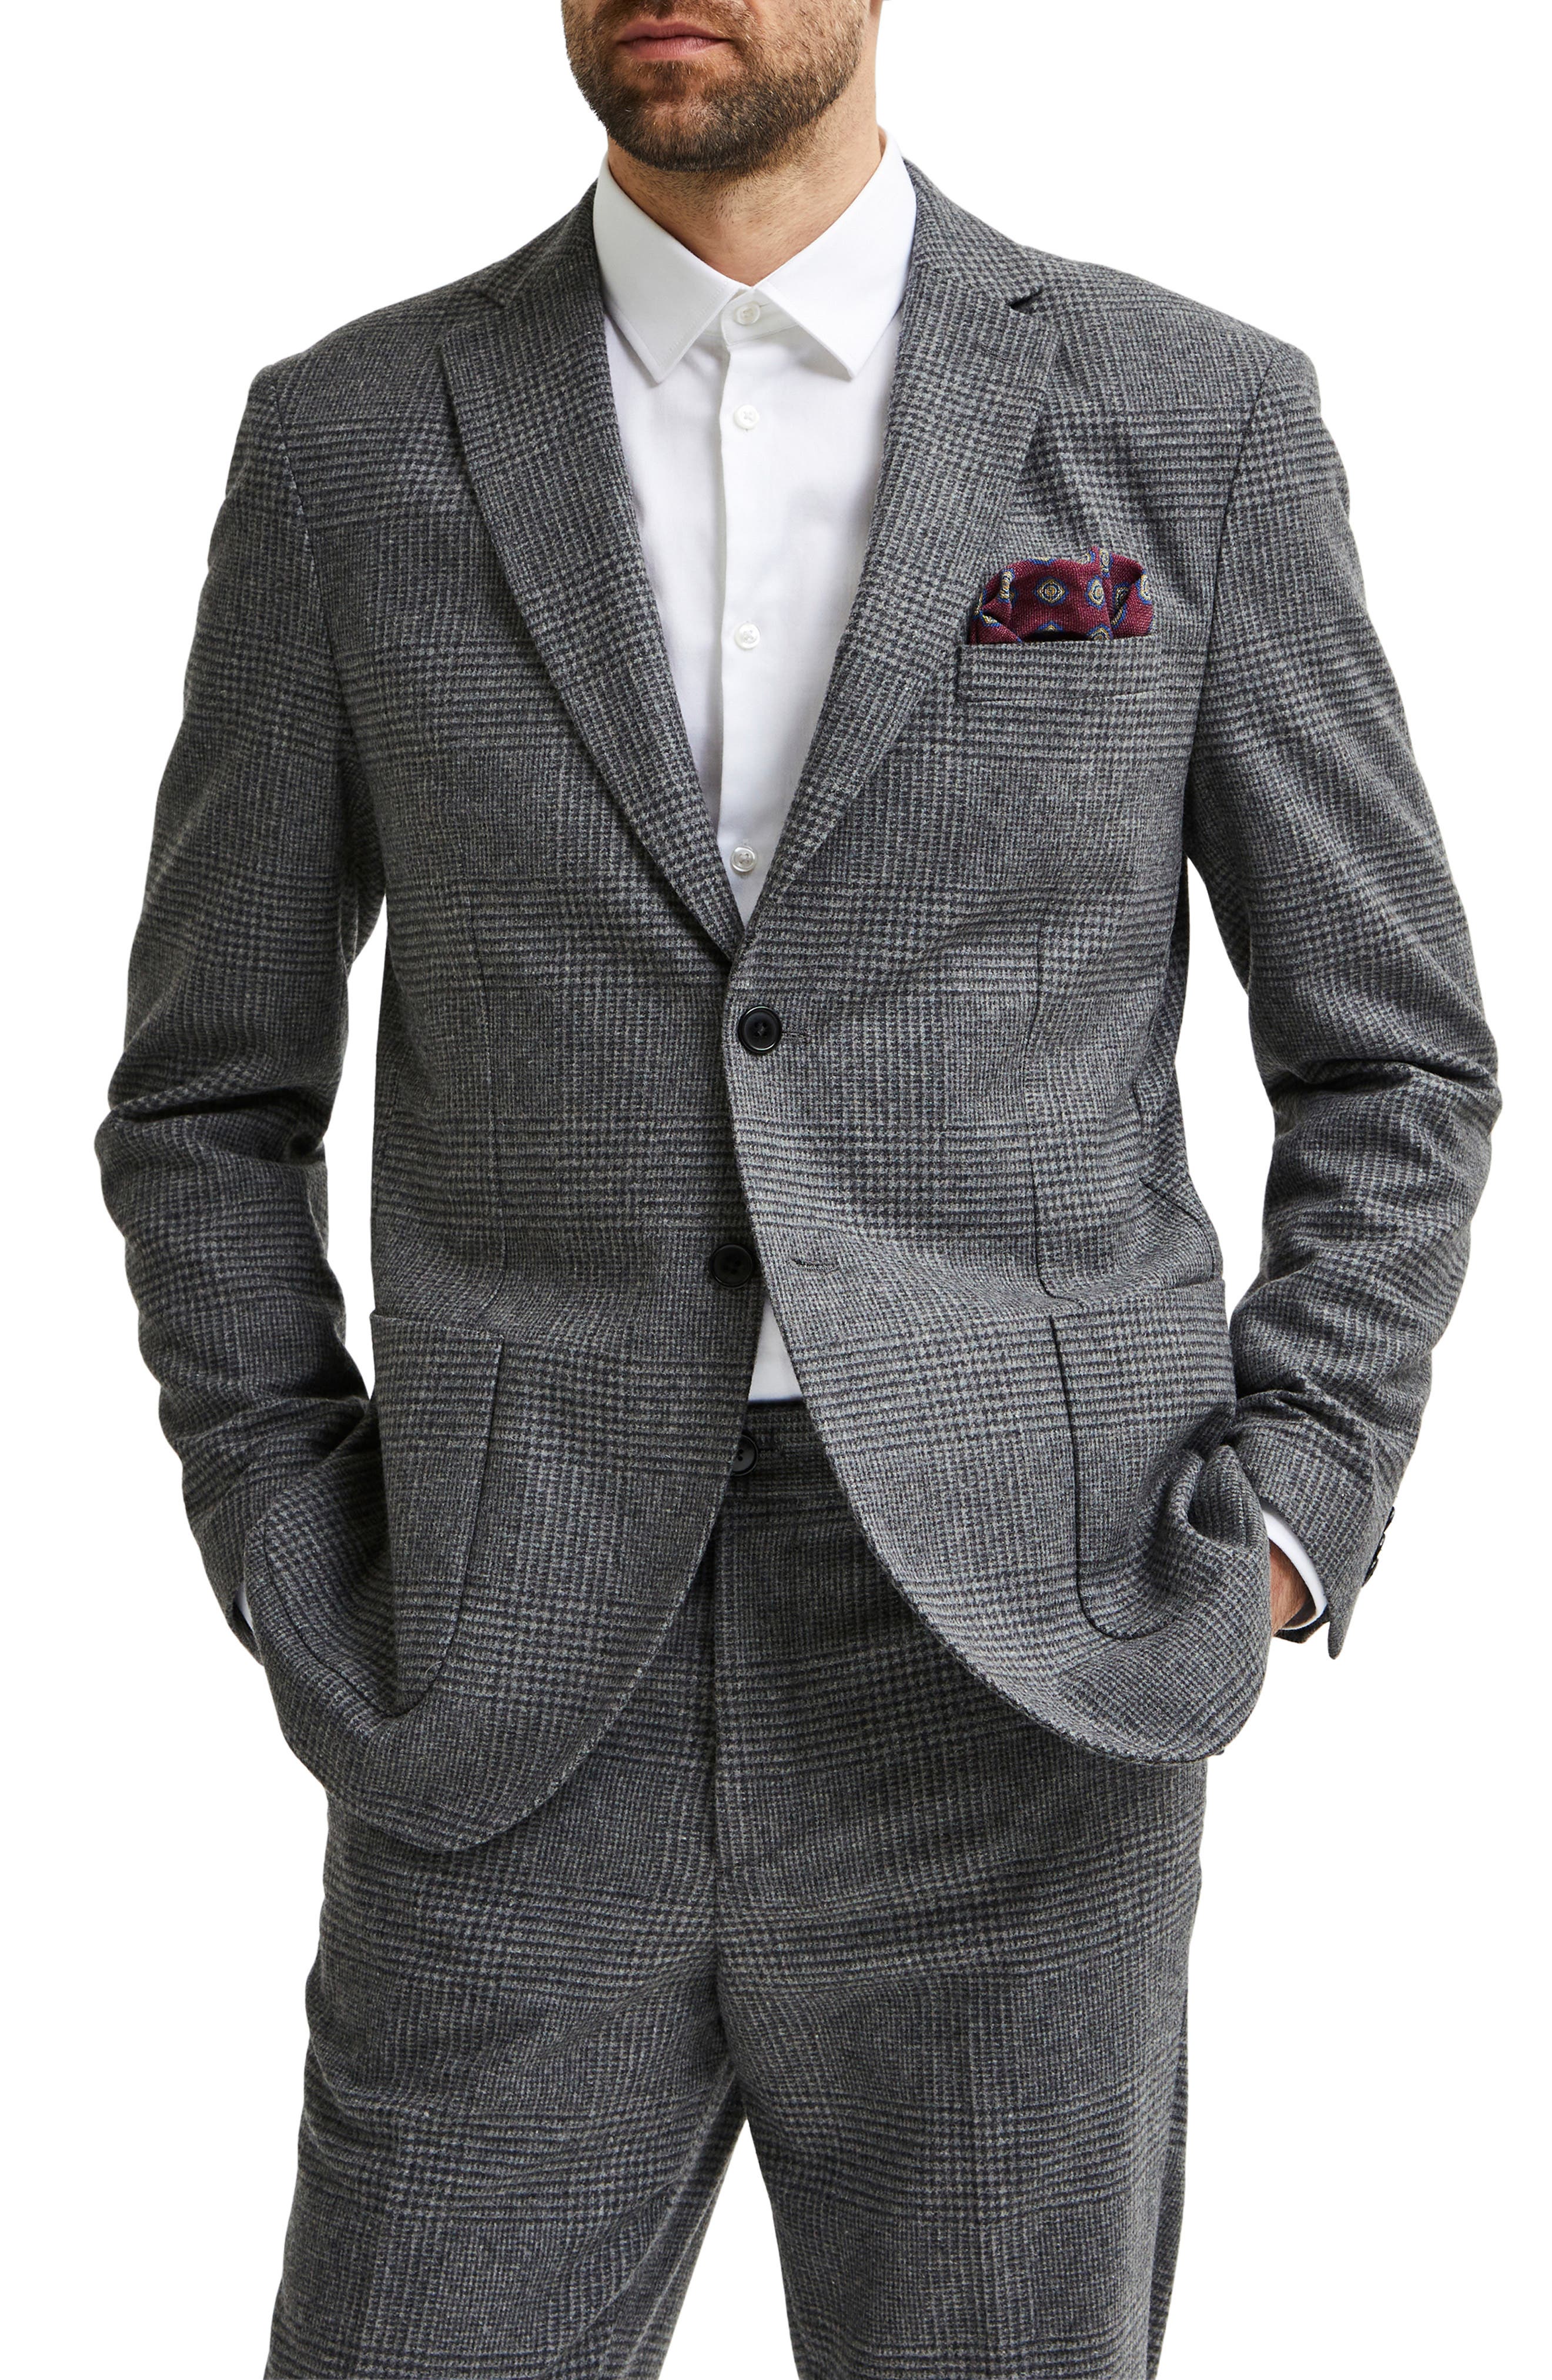 Selected Homme Wes Slim Fit Plaid Wool Blend Sport Coat in Grey at Nordstrom